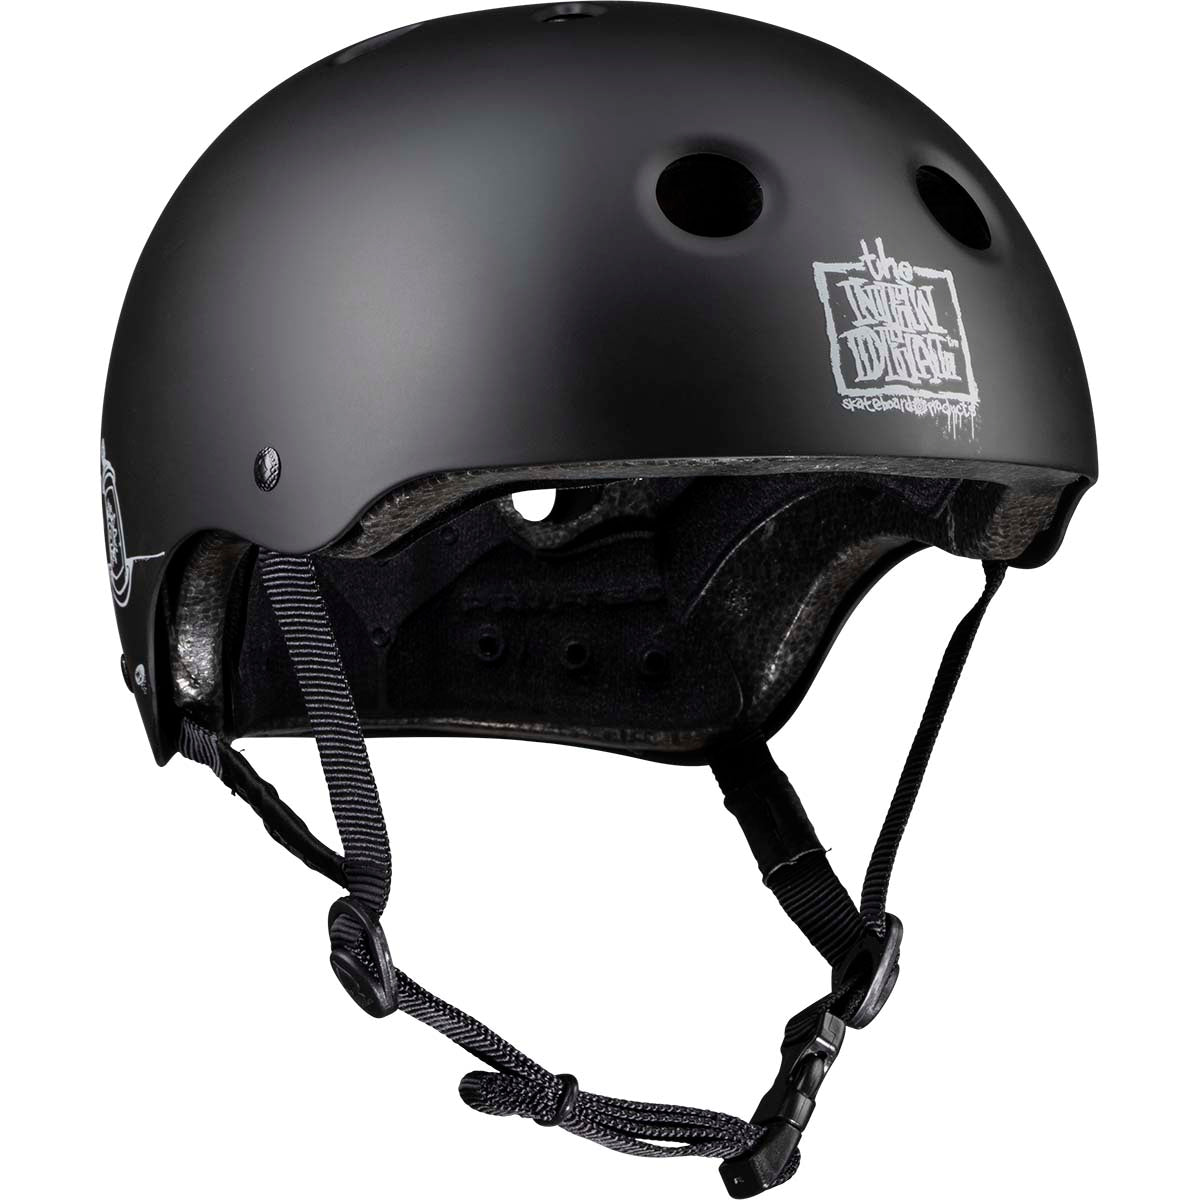 Pro-Tec x New Deal Spray Classic Certified Helmet - Black image 4